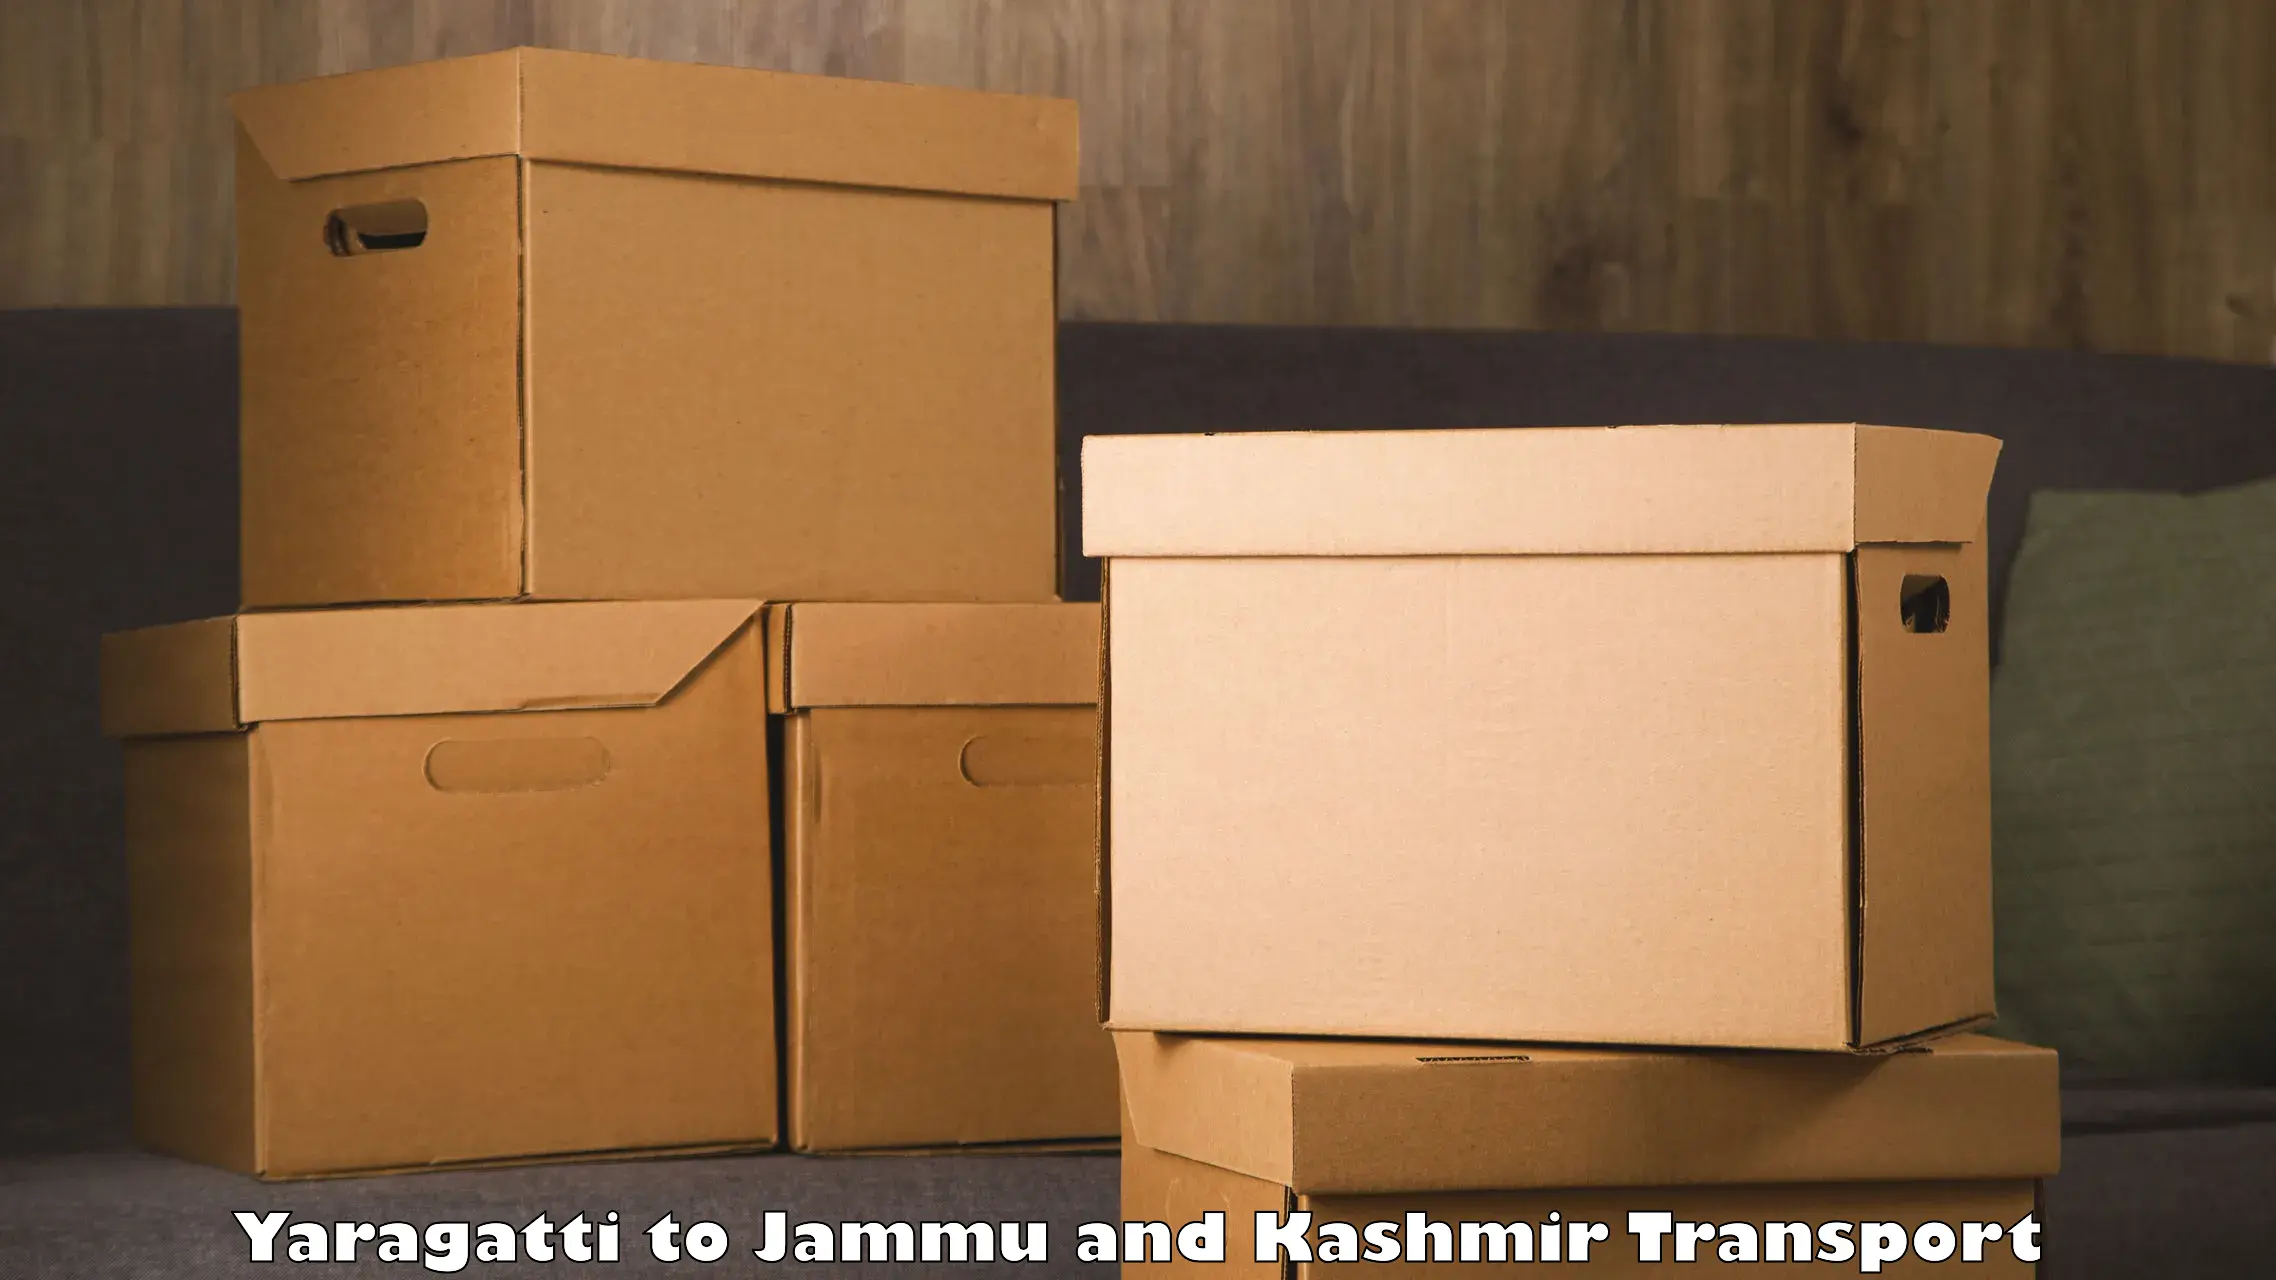 Truck transport companies in India Yaragatti to Bandipur